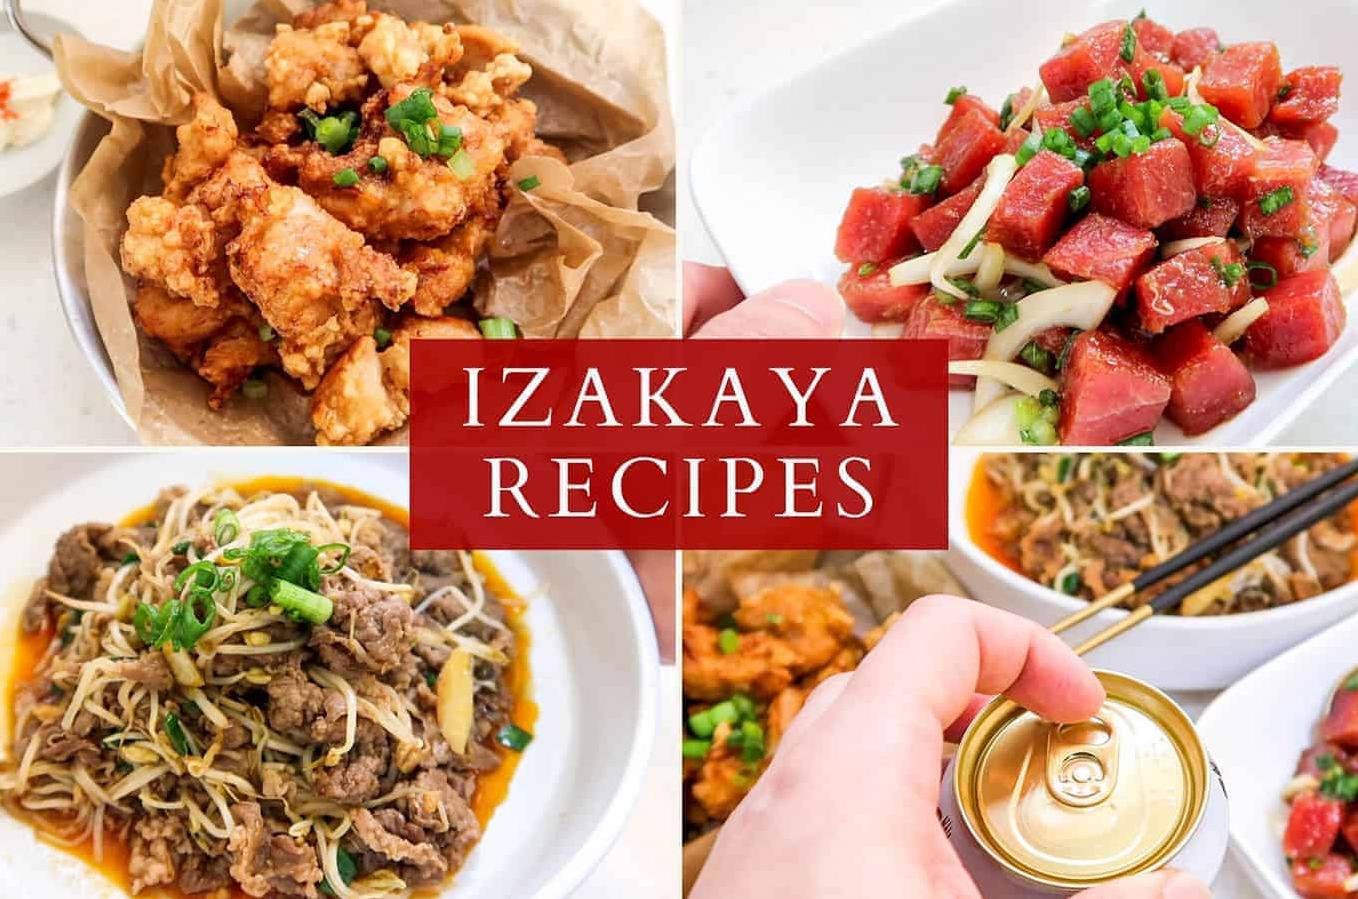  Can you handle this Izakaya-style temptation?